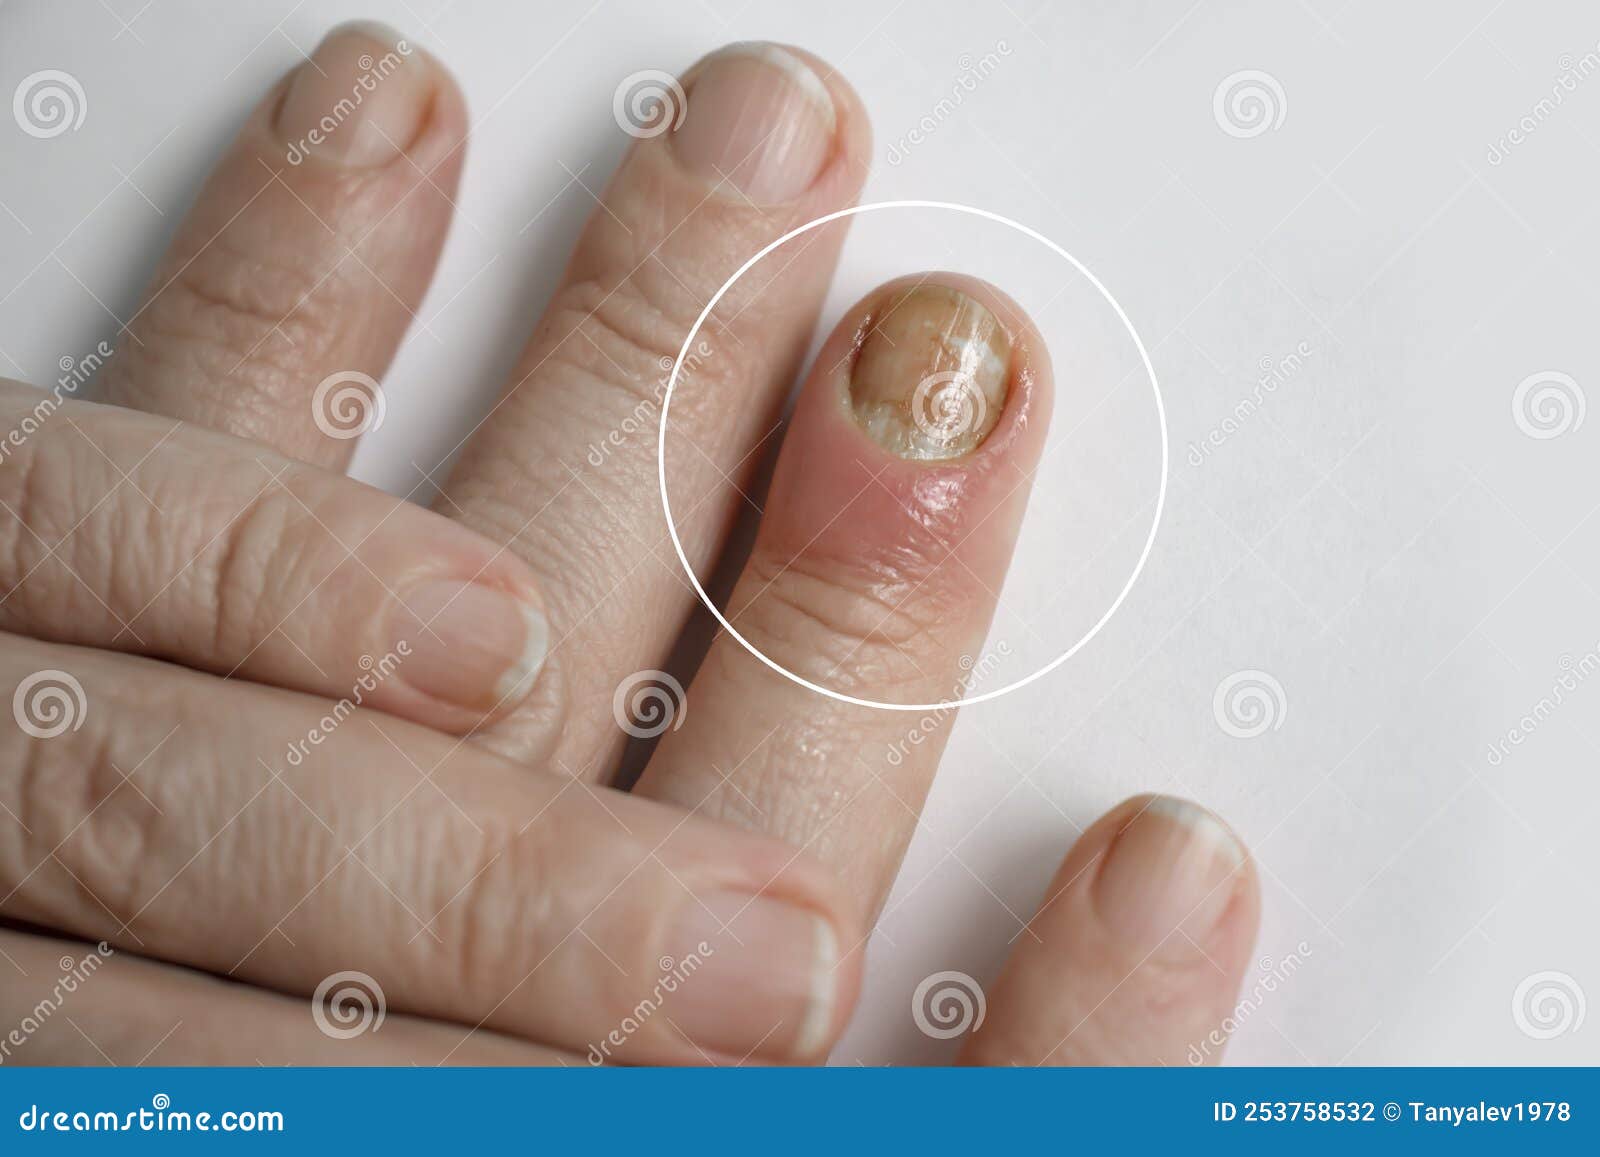 paronychia disease of the fingernail ingrown   painful  healing  painful  problem